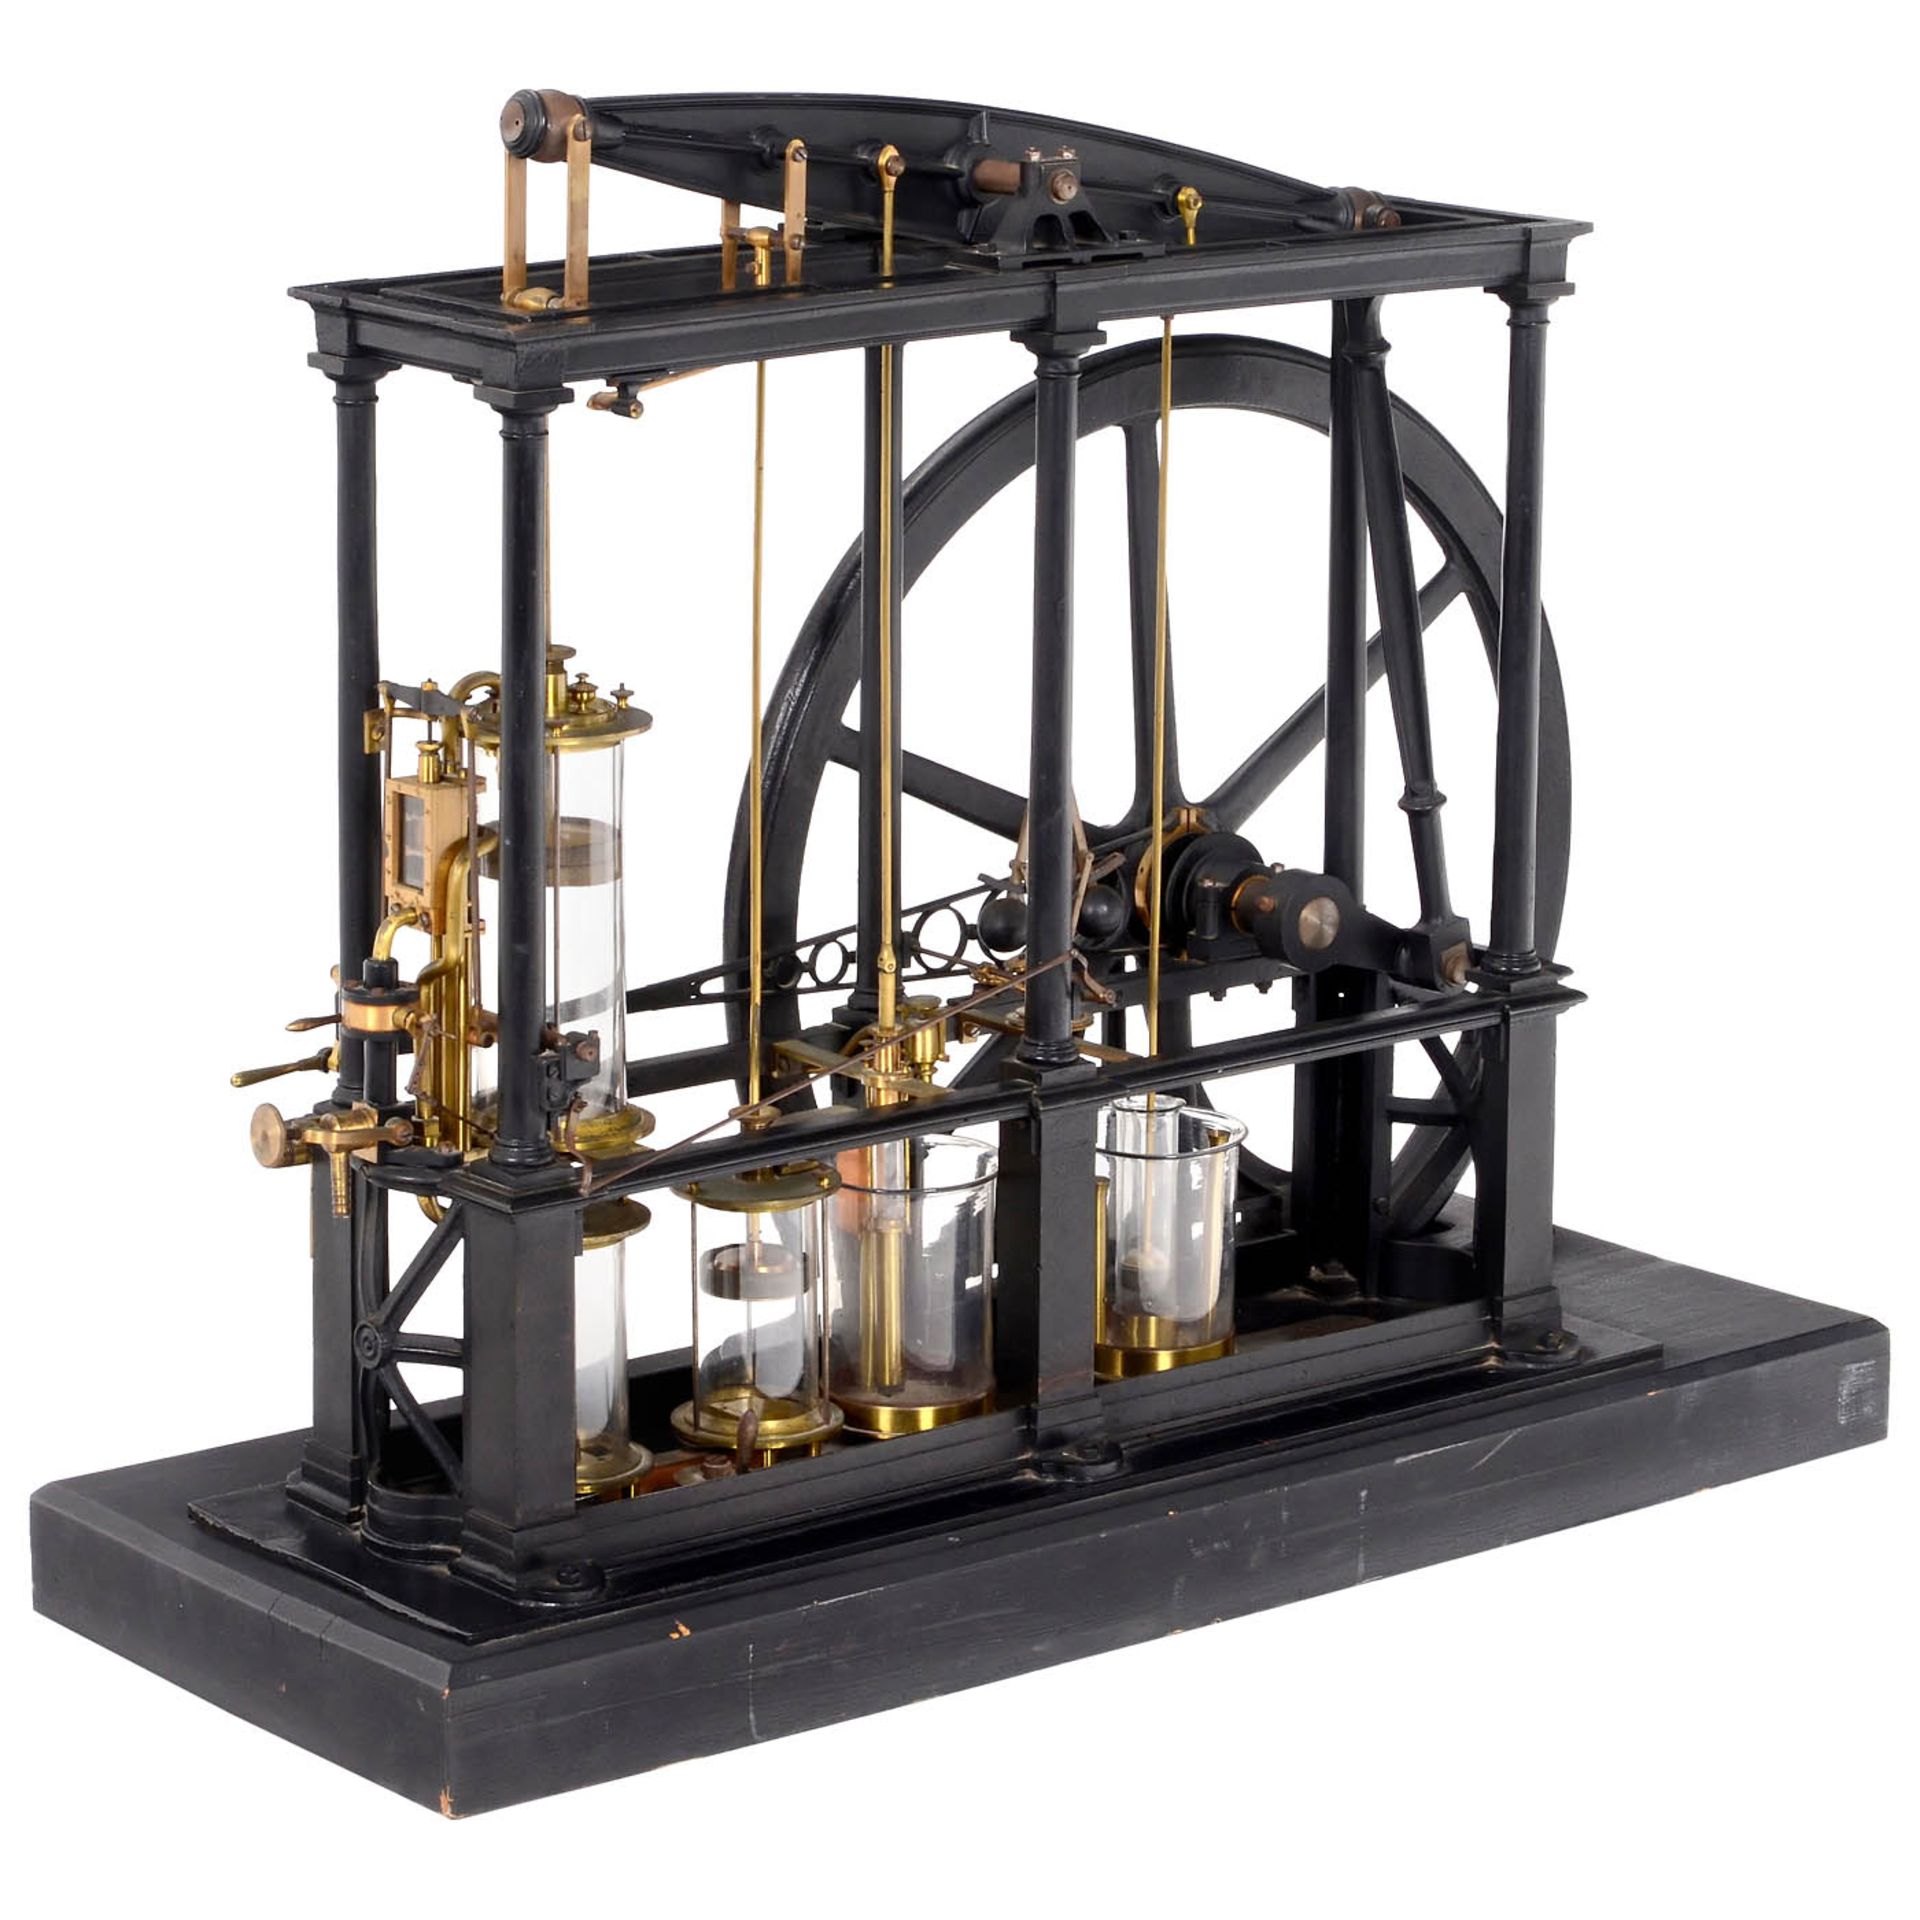 Physical Demonstration Model of a James Watt-Type Beam Steam Engine, c. 1850